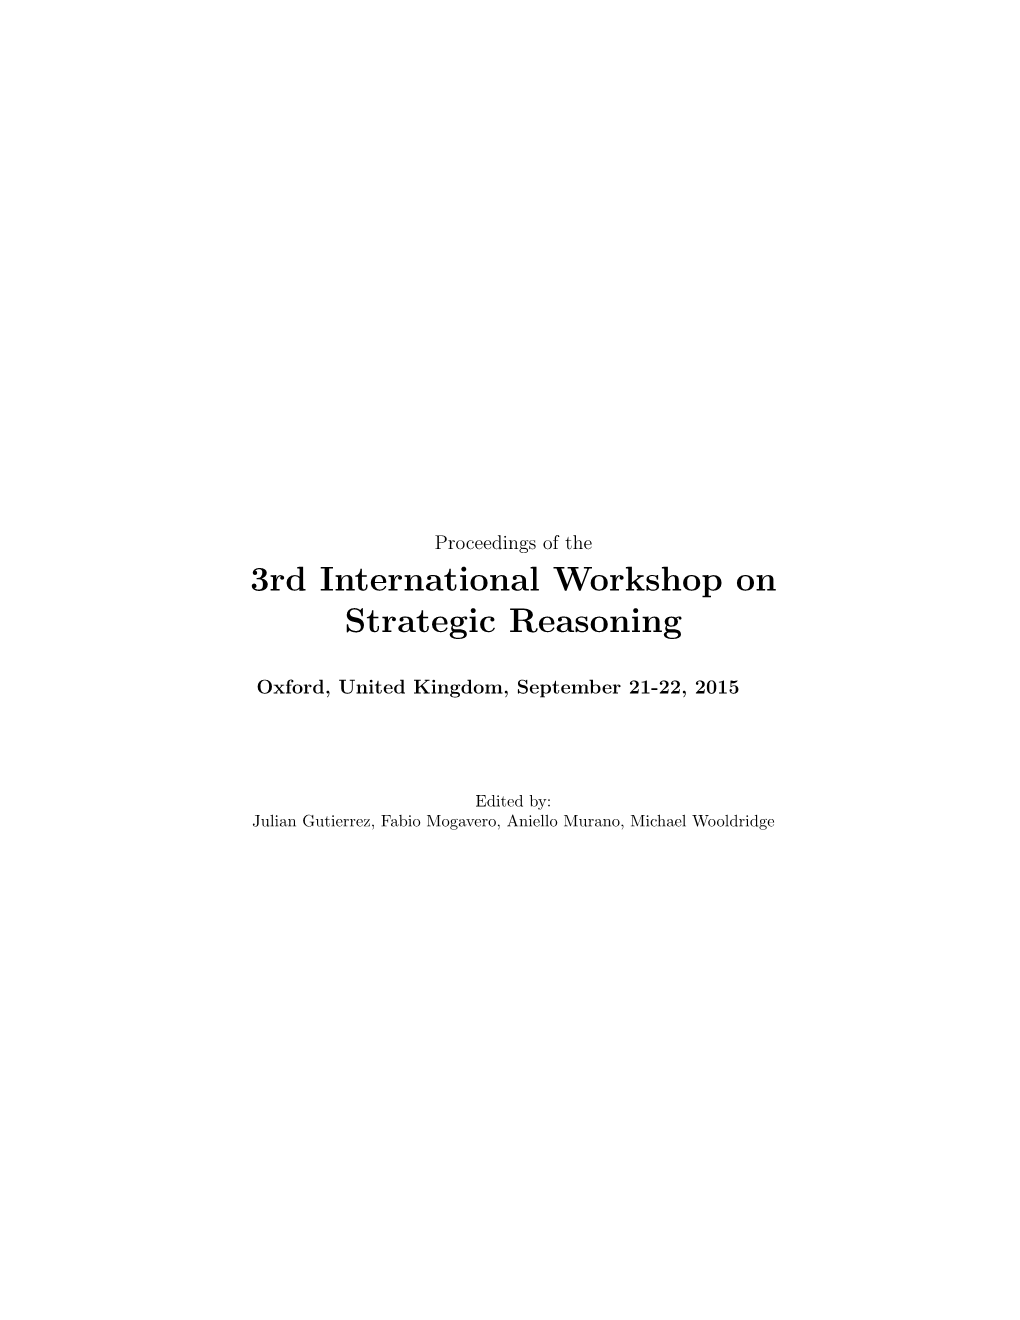 3Rd International Workshop on Strategic Reasoning